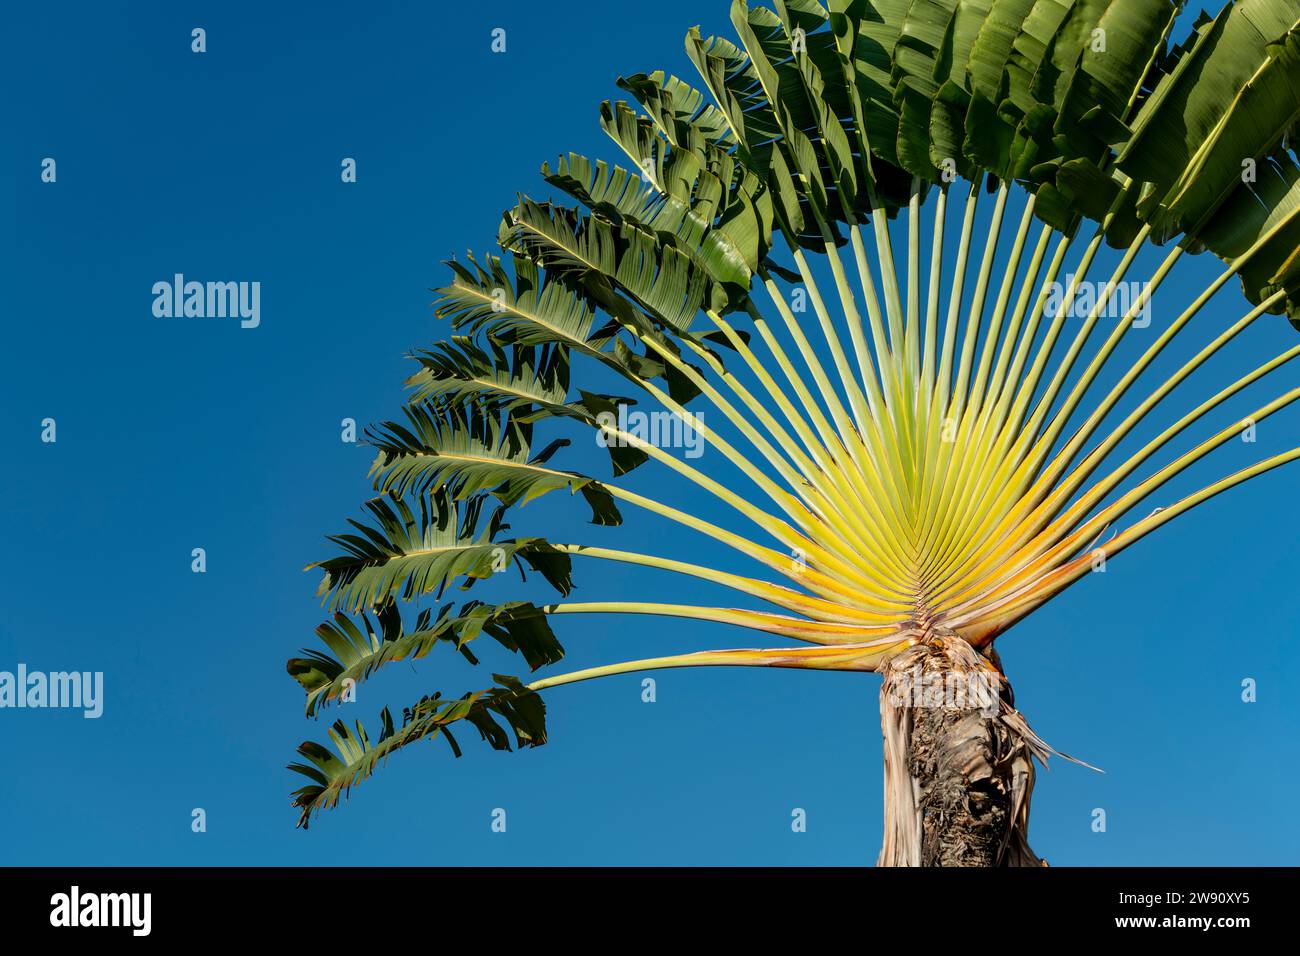 Traveller's Tree or Traveller's Palm (Ravenala madagascariensis) - stock photo Stock Photo